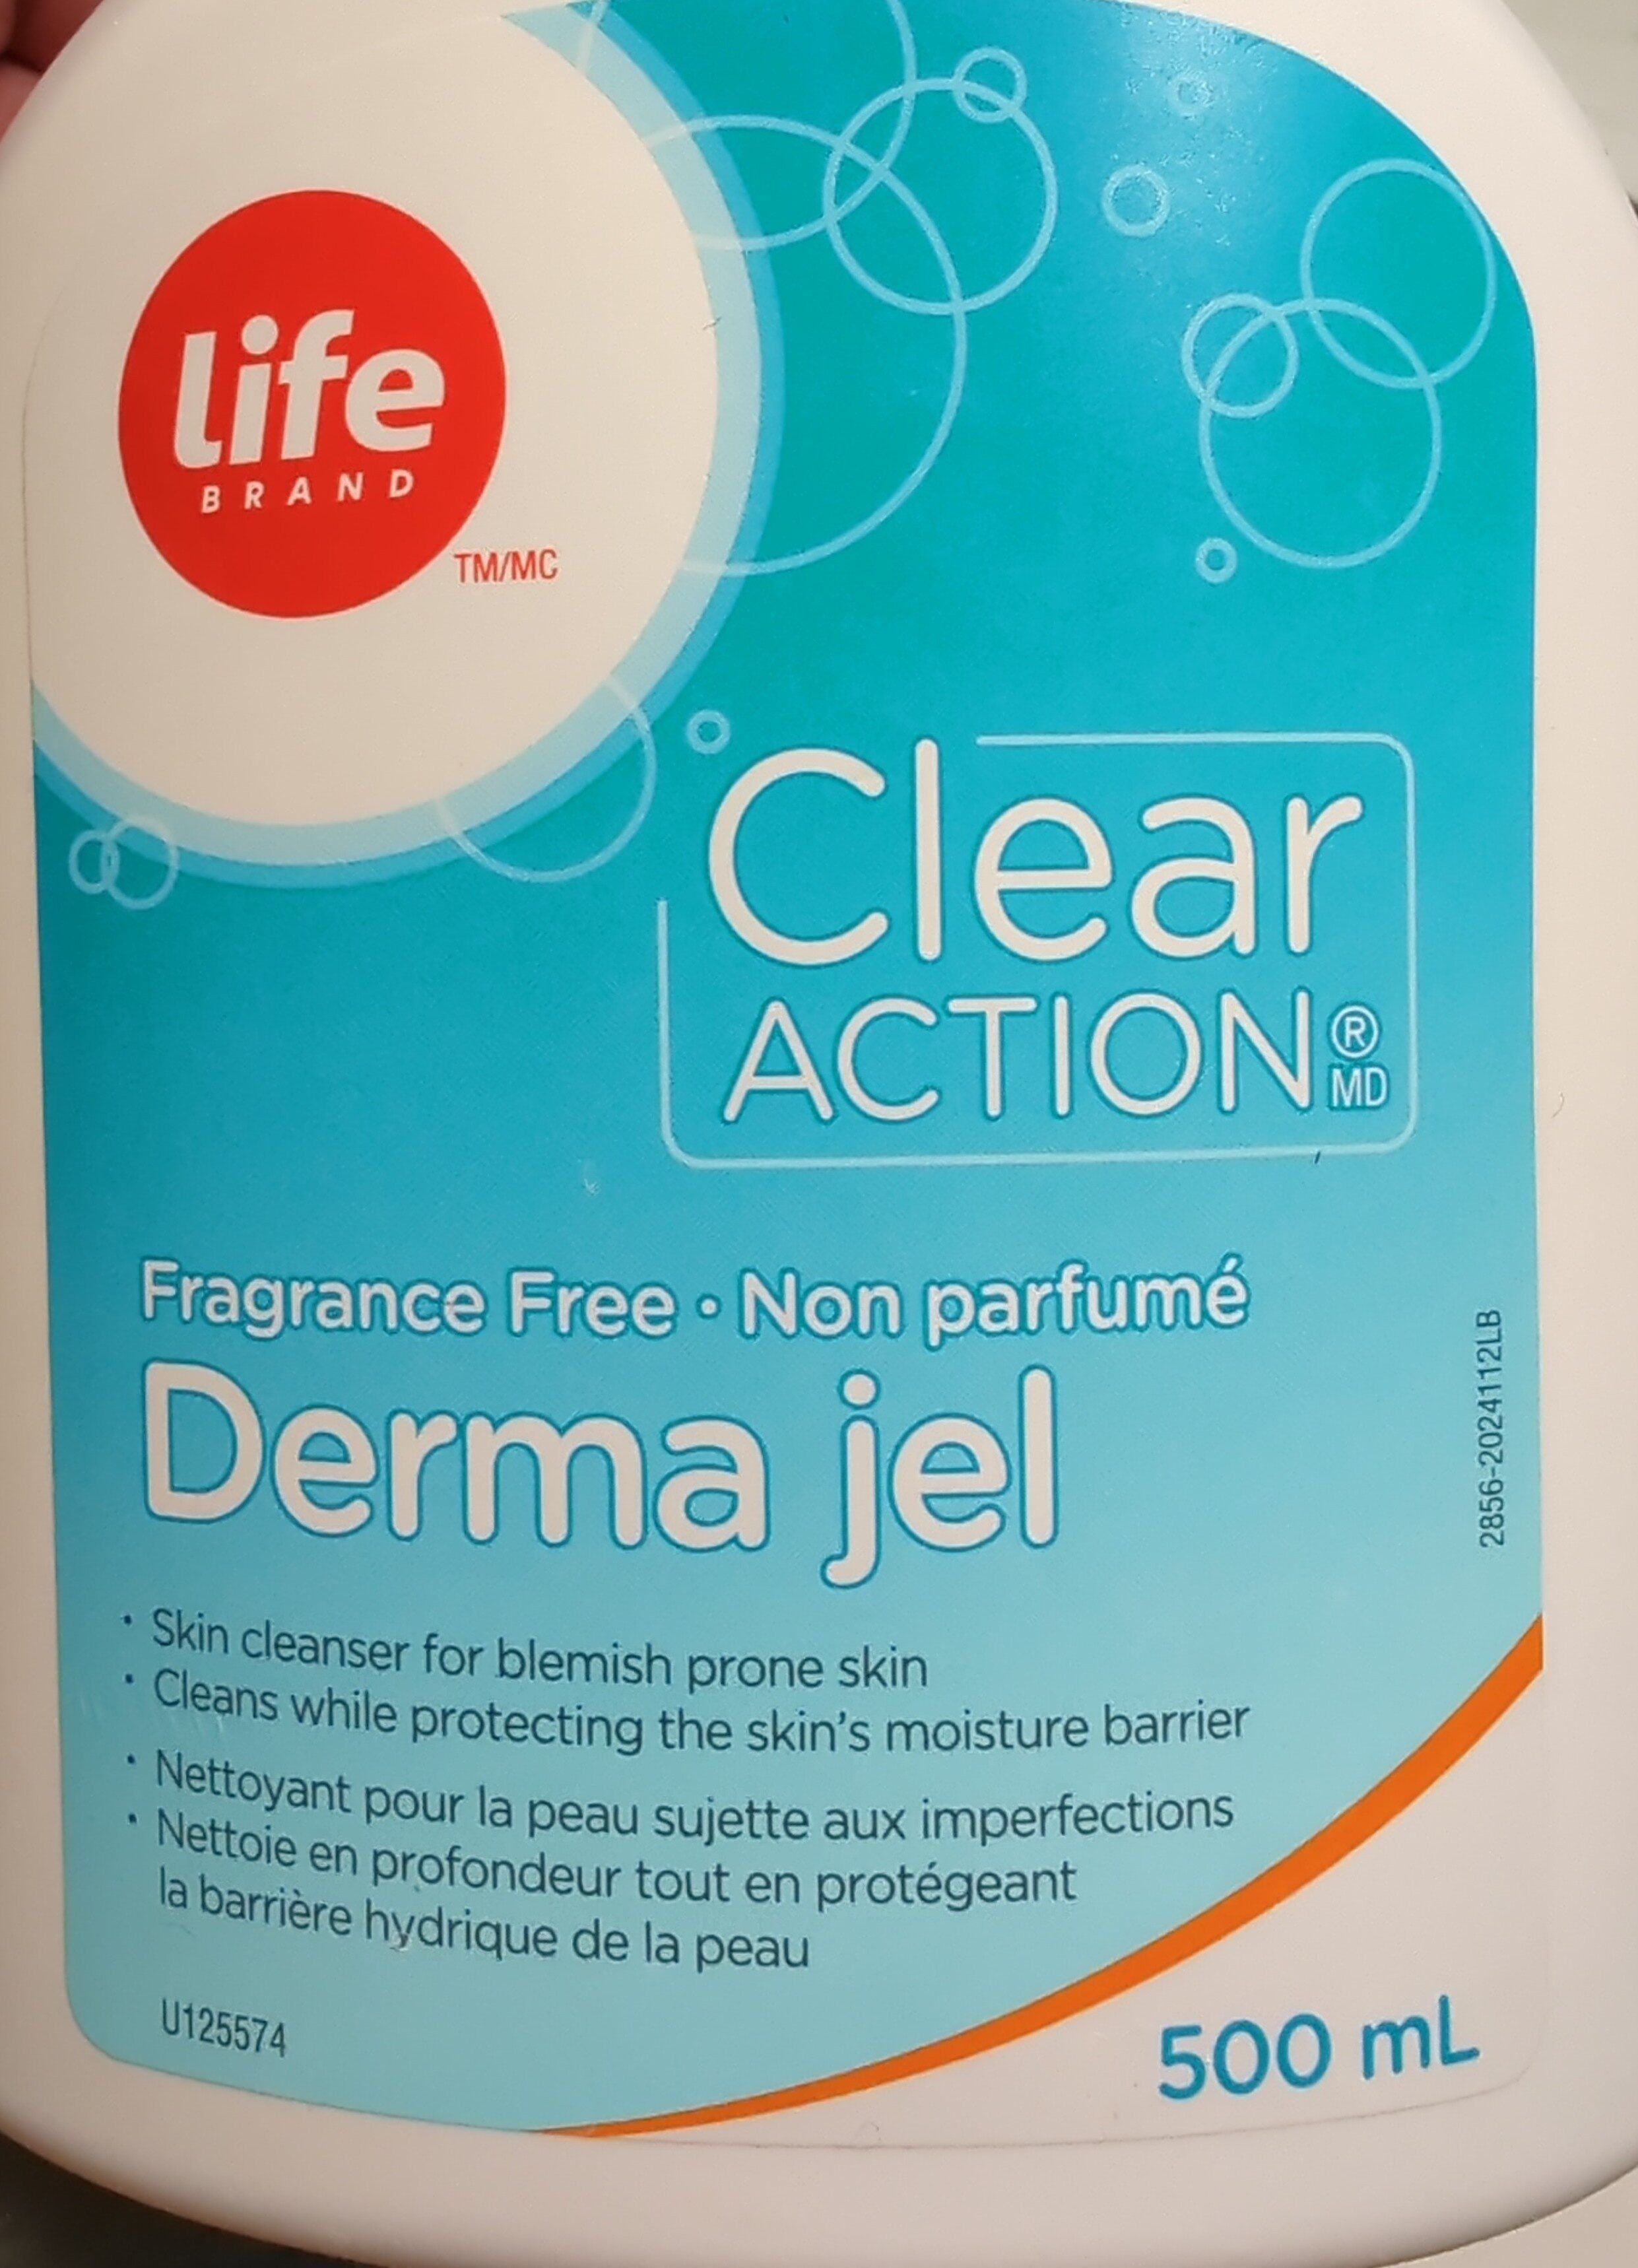 life brand derma jel - Product - en